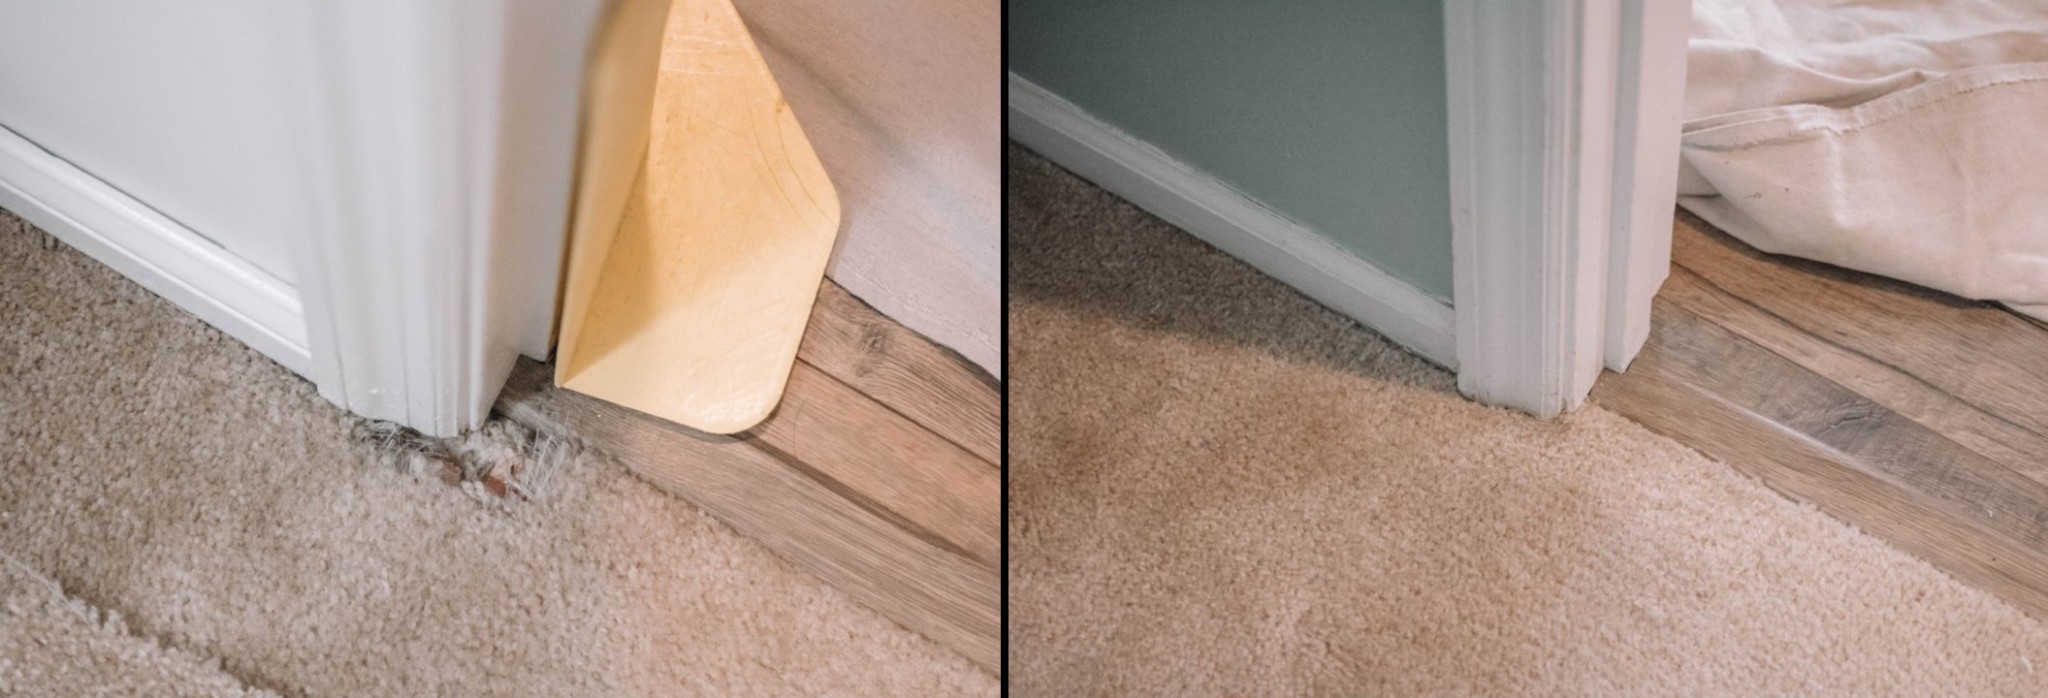 49 Carpet repair dog pet damage patch in bedroom Austin Ro…